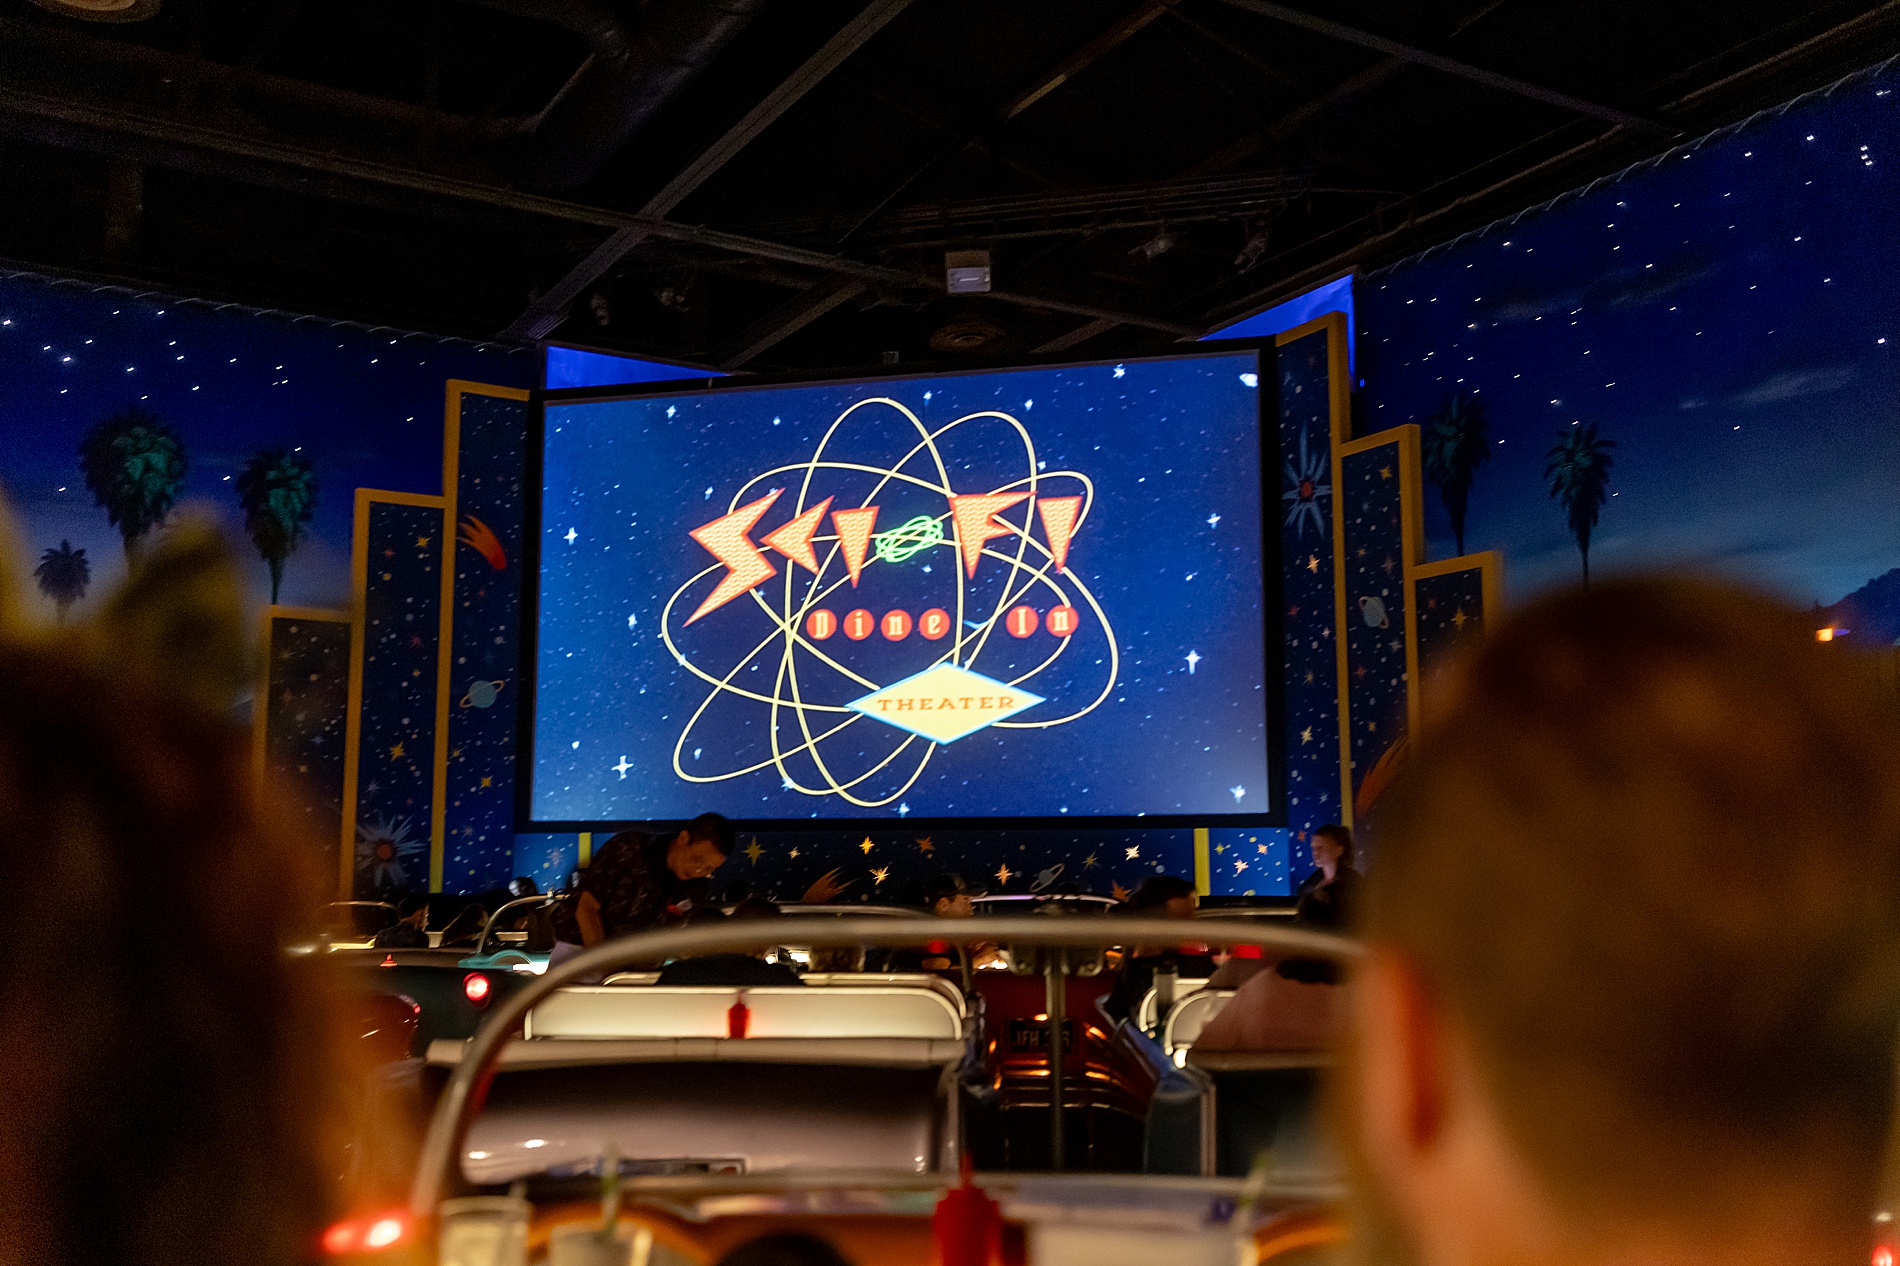 sci-fi dining theatre at Disney Hollywood Studios